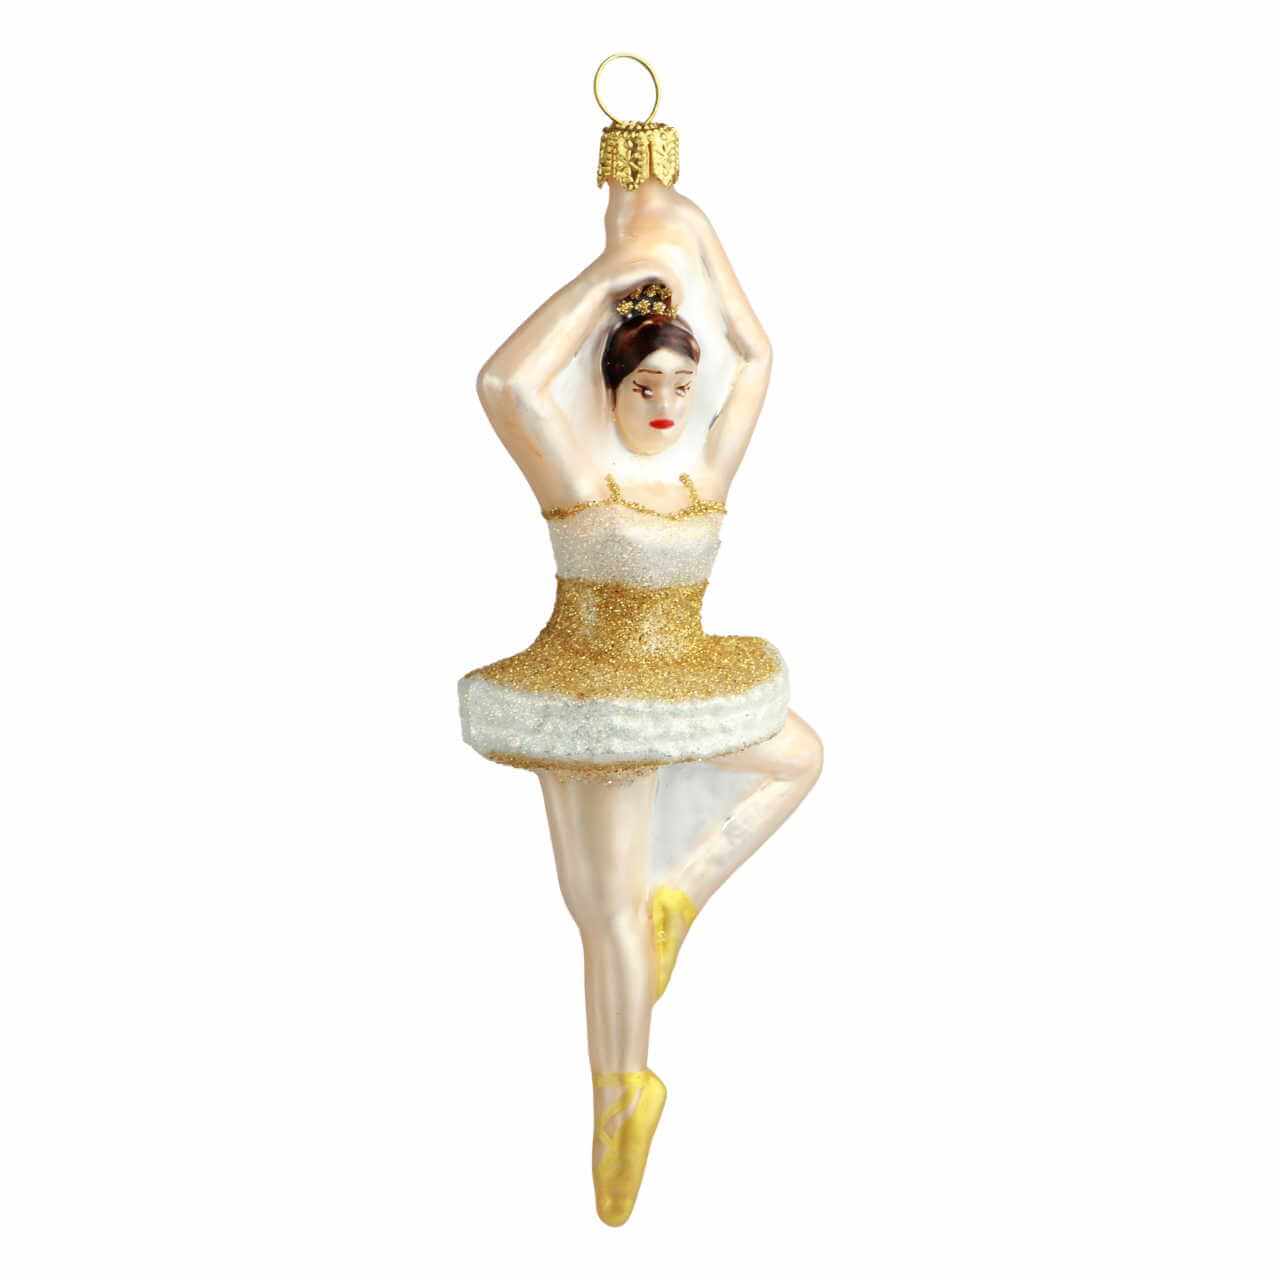 Ballerina - Ballet dancer